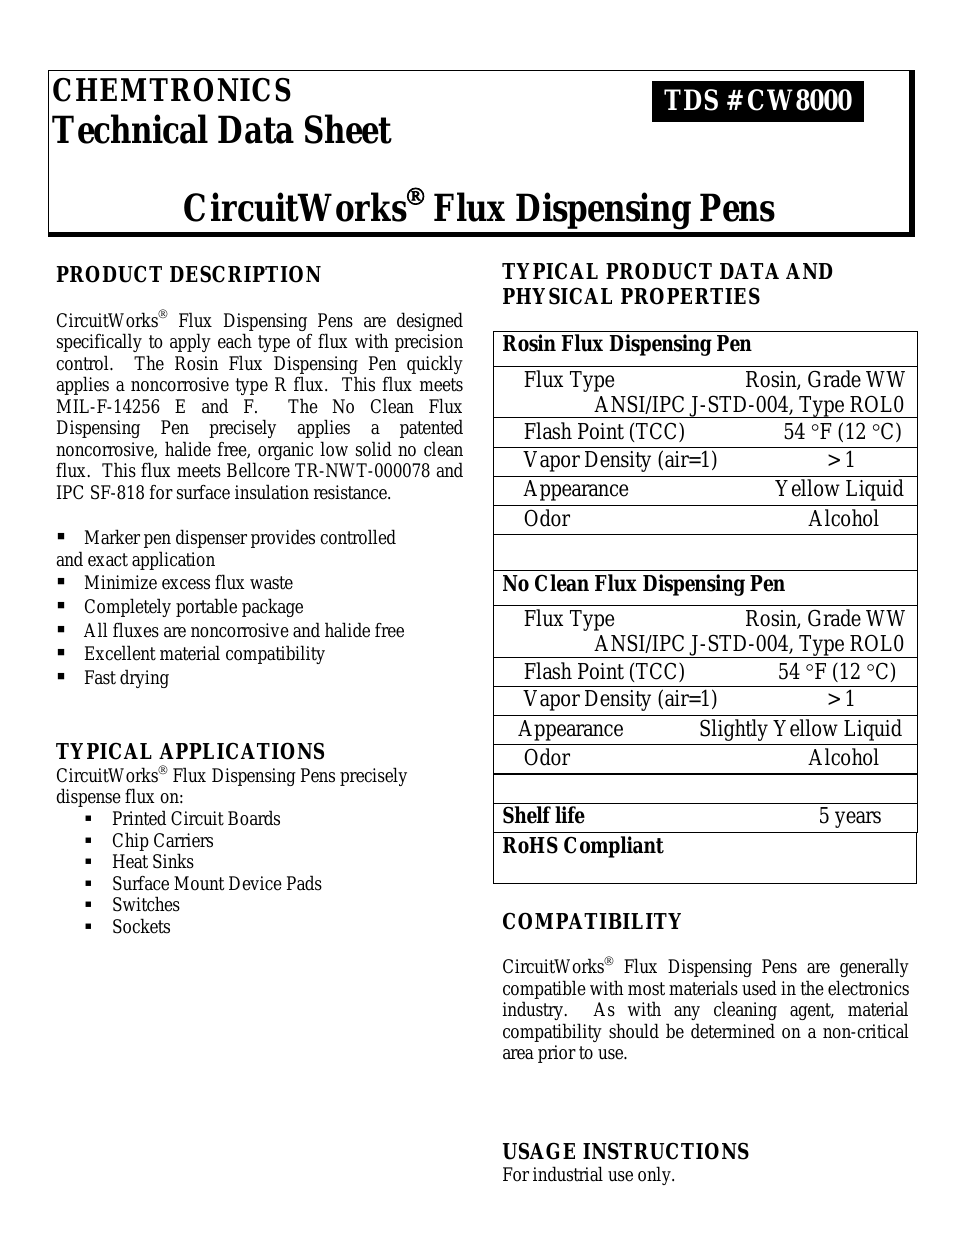 CircuitWorks® No Clean Flux Dispensing Pen CW8100